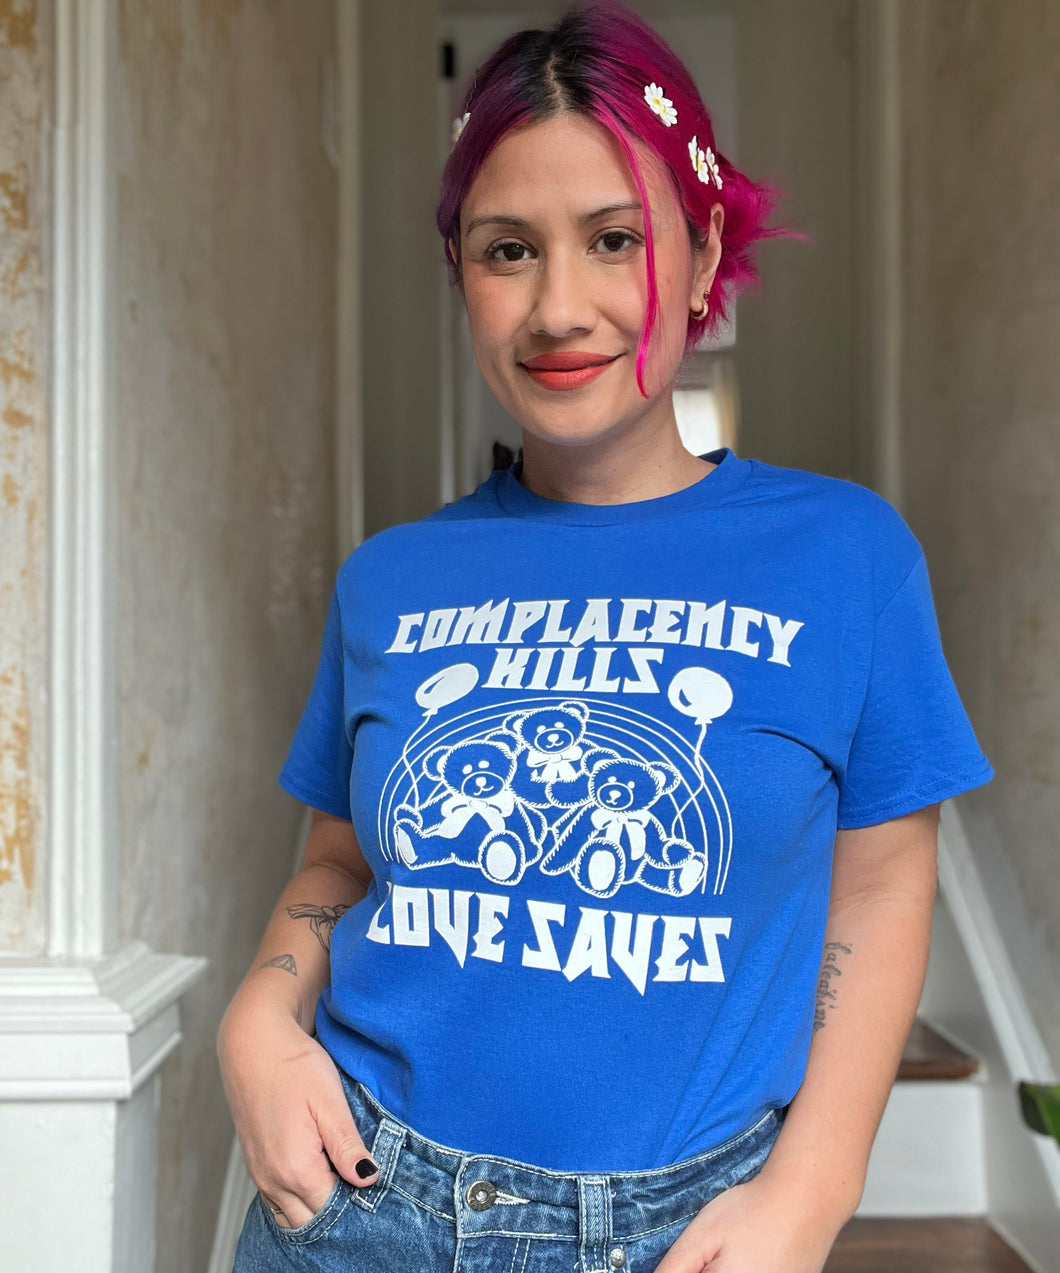 Complacency Kills/Love Saves T-Shirt (Blue)